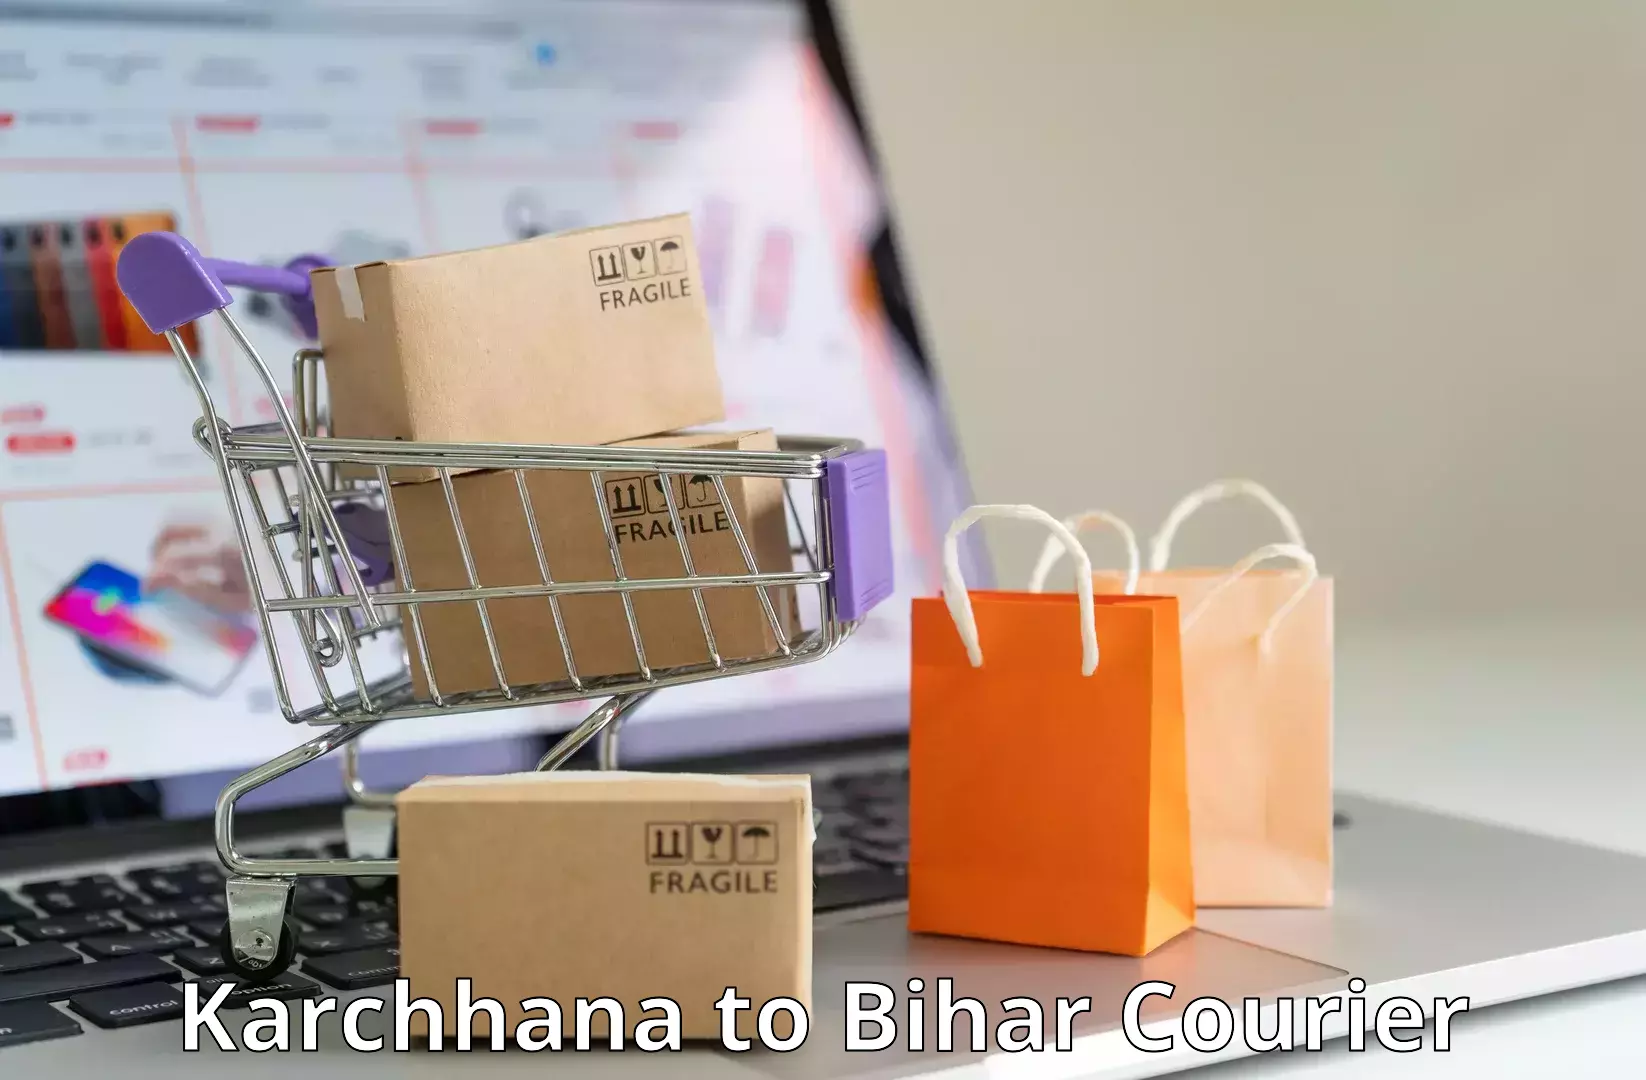 Global shipping networks Karchhana to Aurangabad Bihar